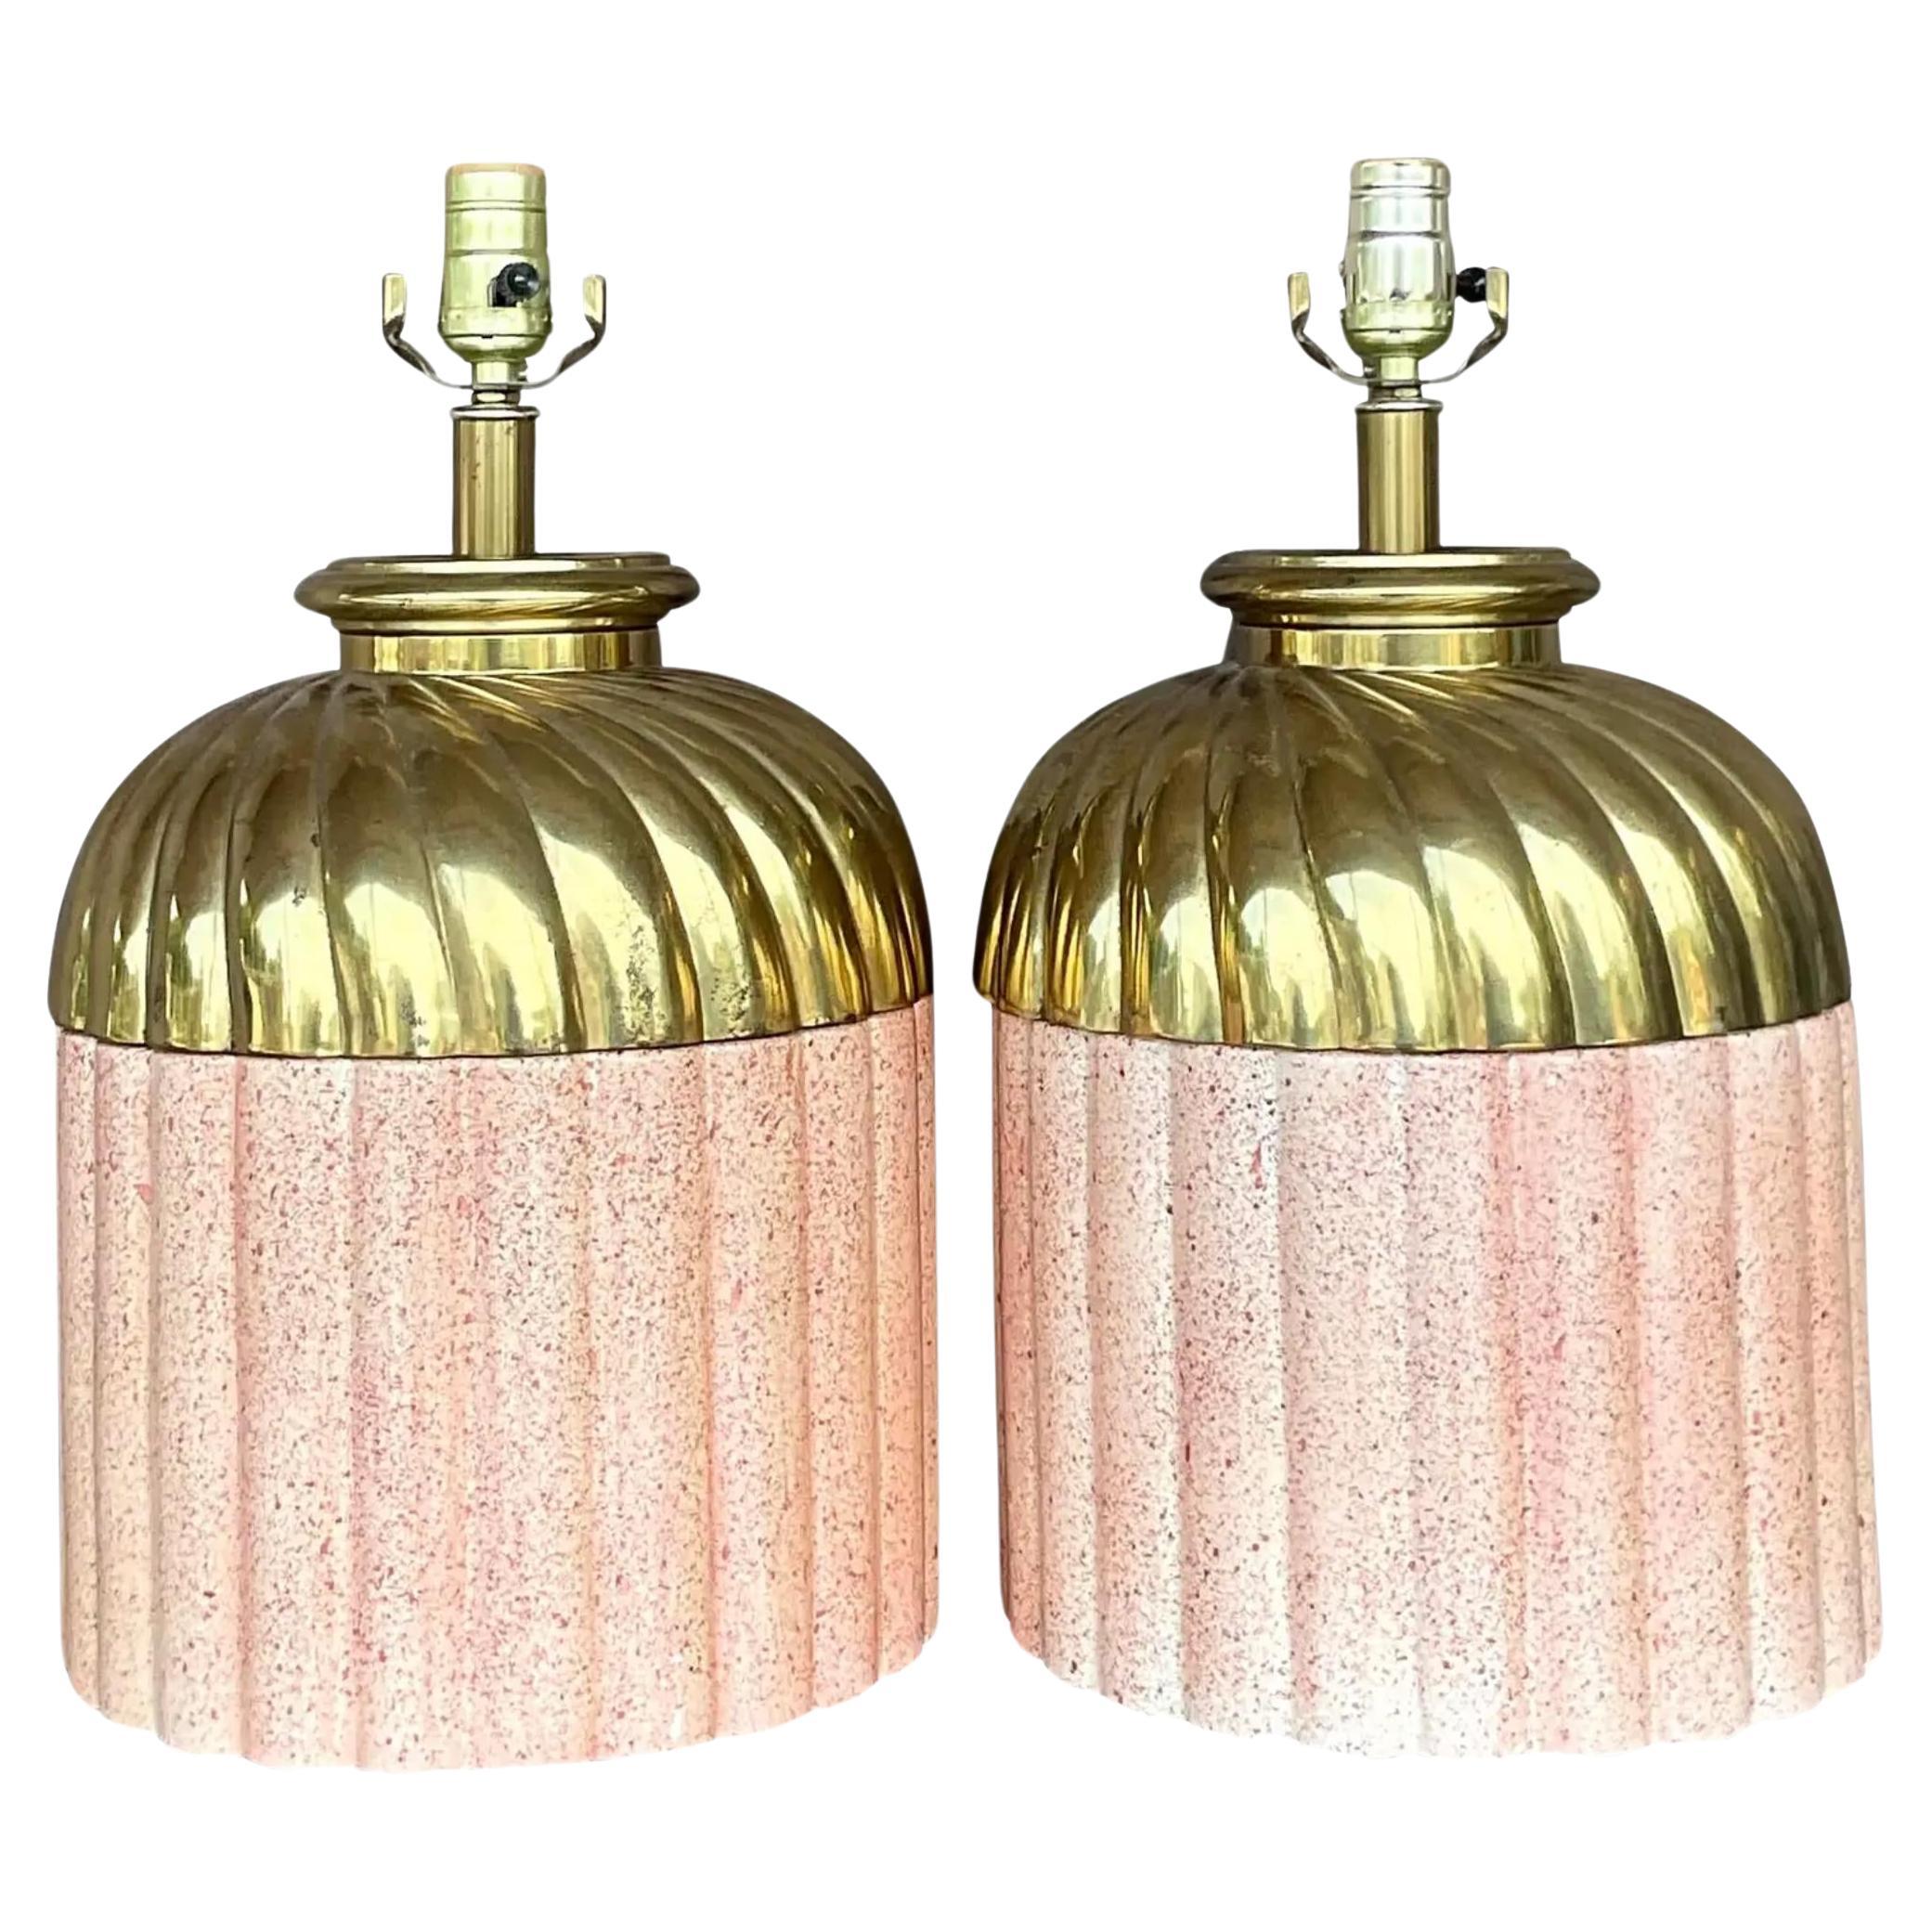 Vintage Boho-Lampen aus Messing und Keramik - ein Paar